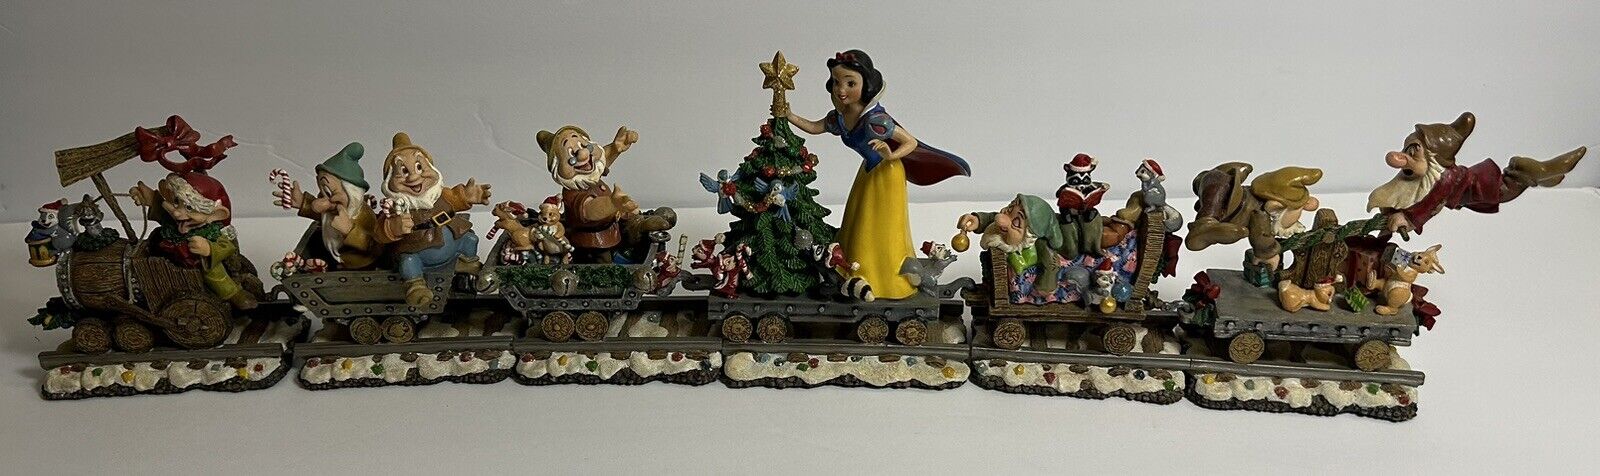 The Danbury Mint - Walt Disney’s Snow White and the Seven Dwarfs Christmas Train